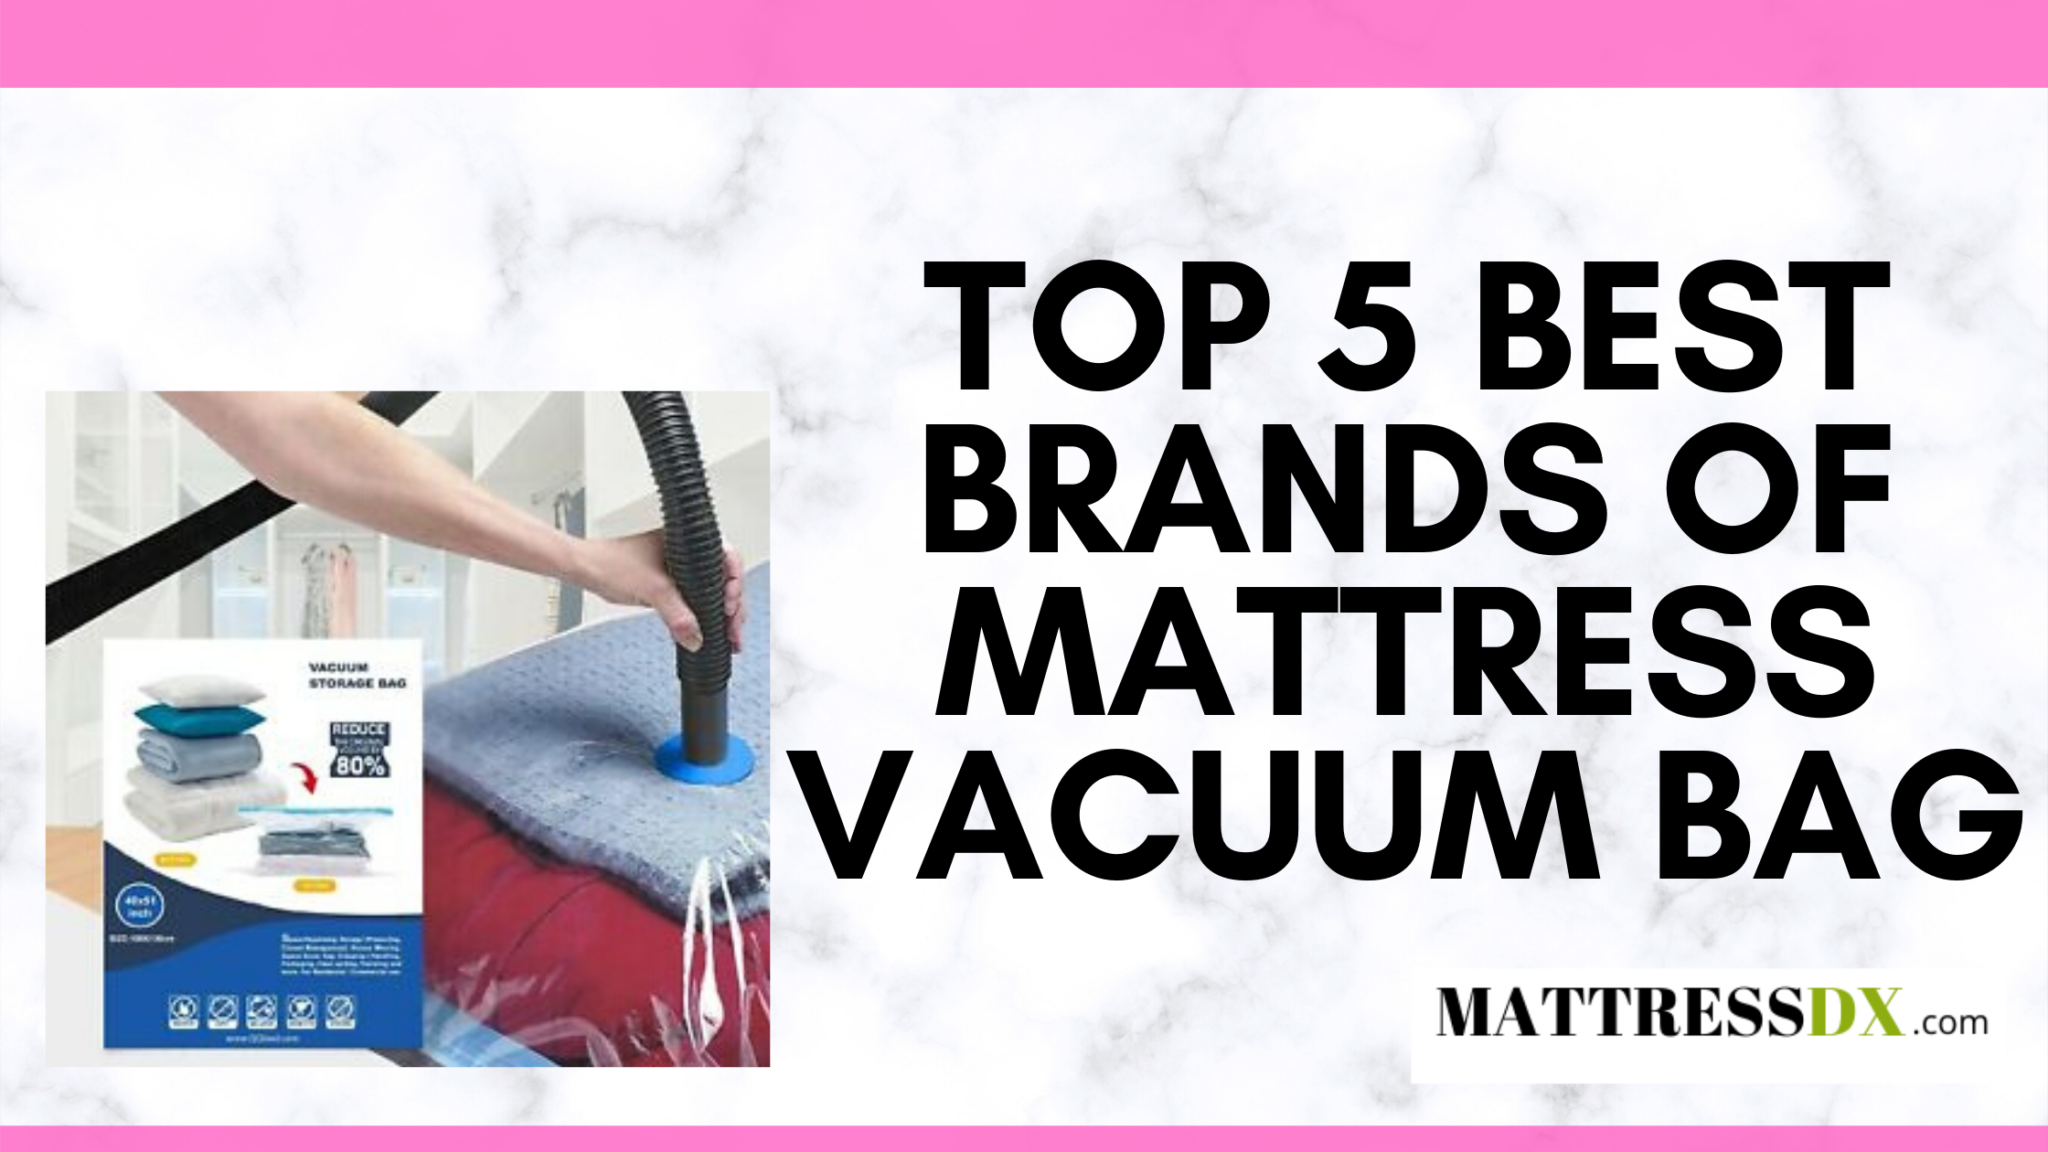 lifesmart queen mattress vacuum bag